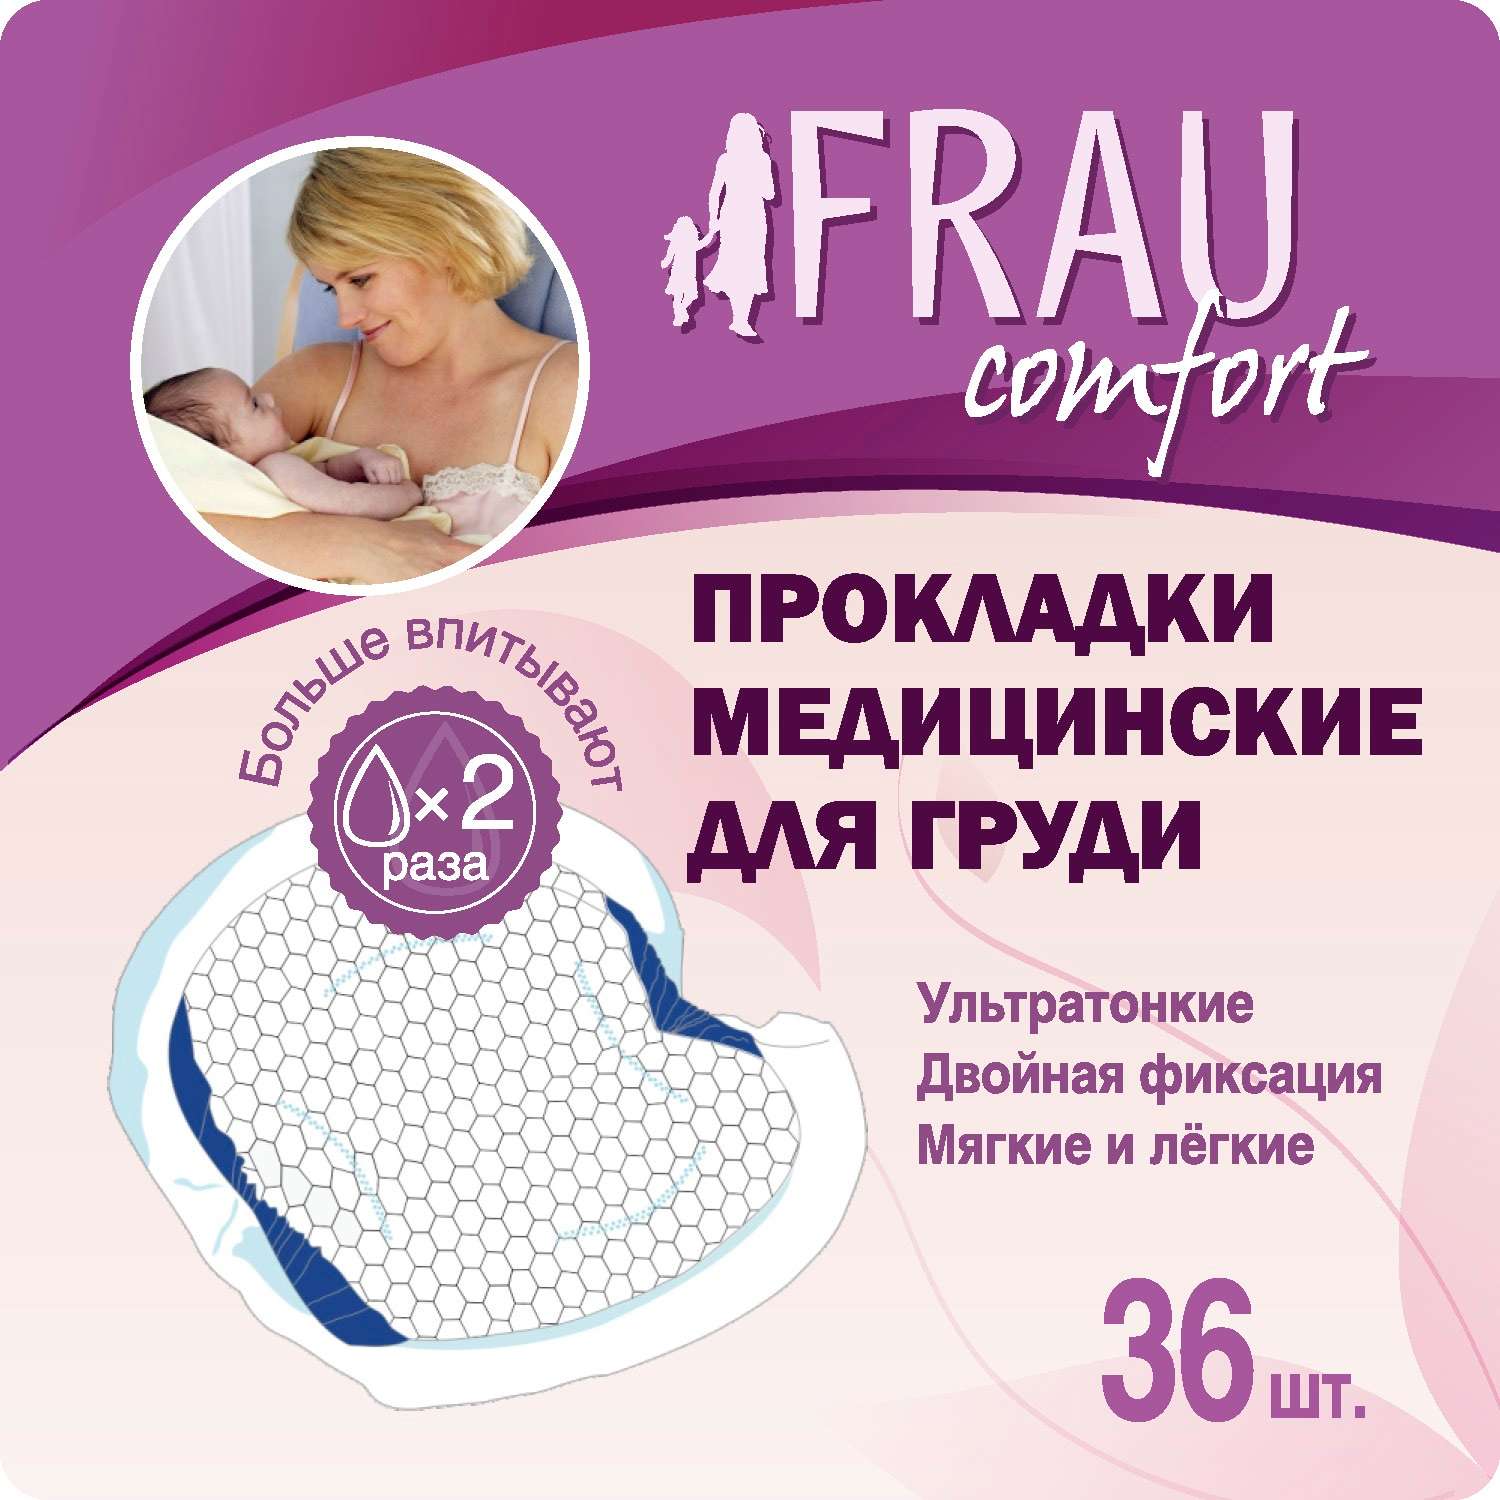 Прокладки для груди Frau Comfort 36 шт - фото 2